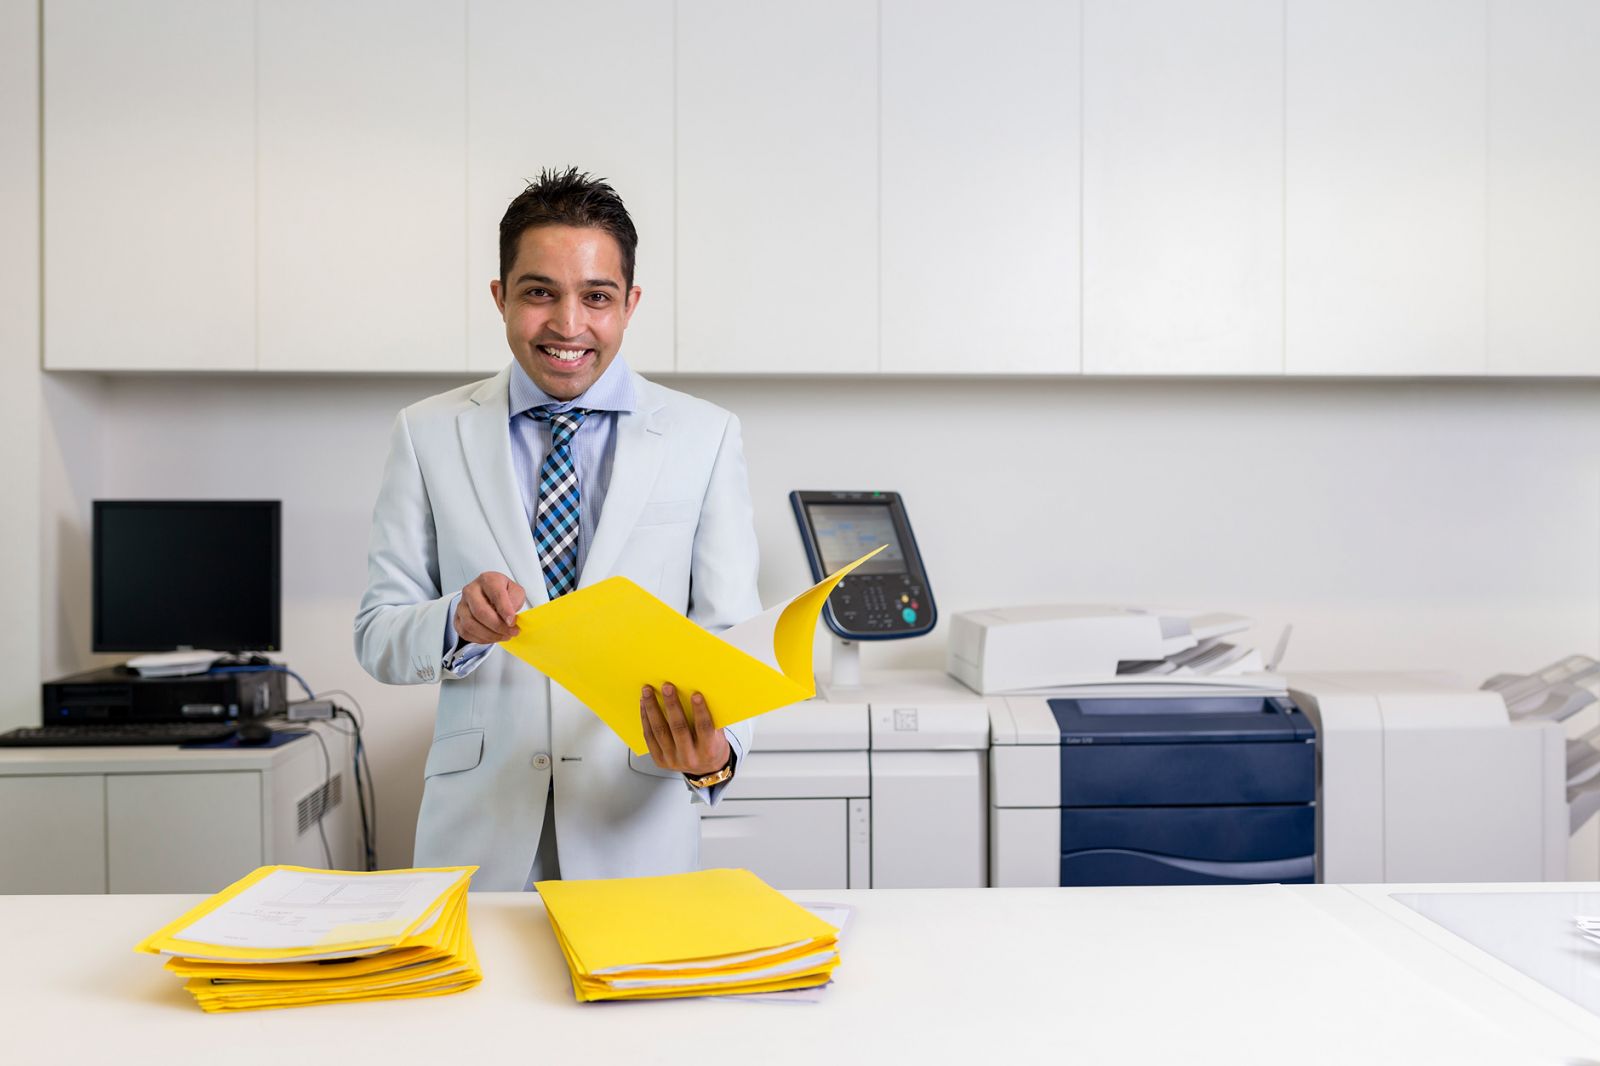 Smiling man holding folders